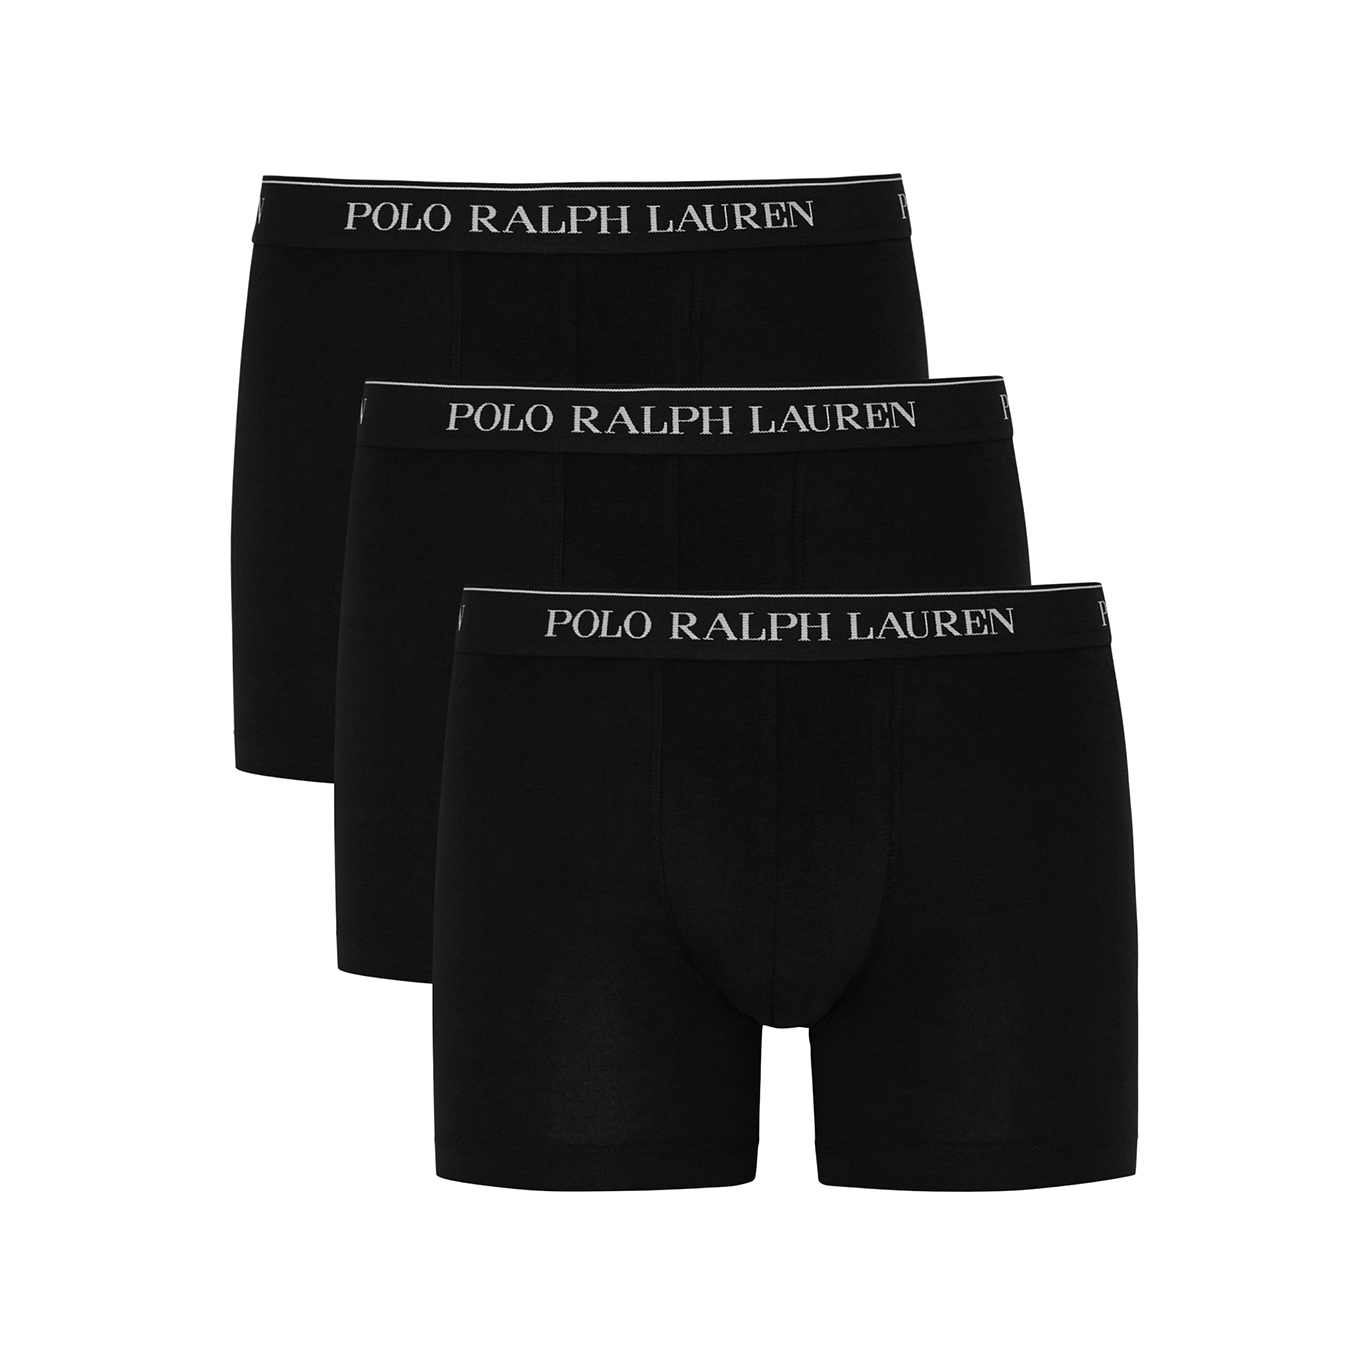 Polo Ralph Lauren Black Stretch-cotton Boxer Briefs - Set Of Three - M